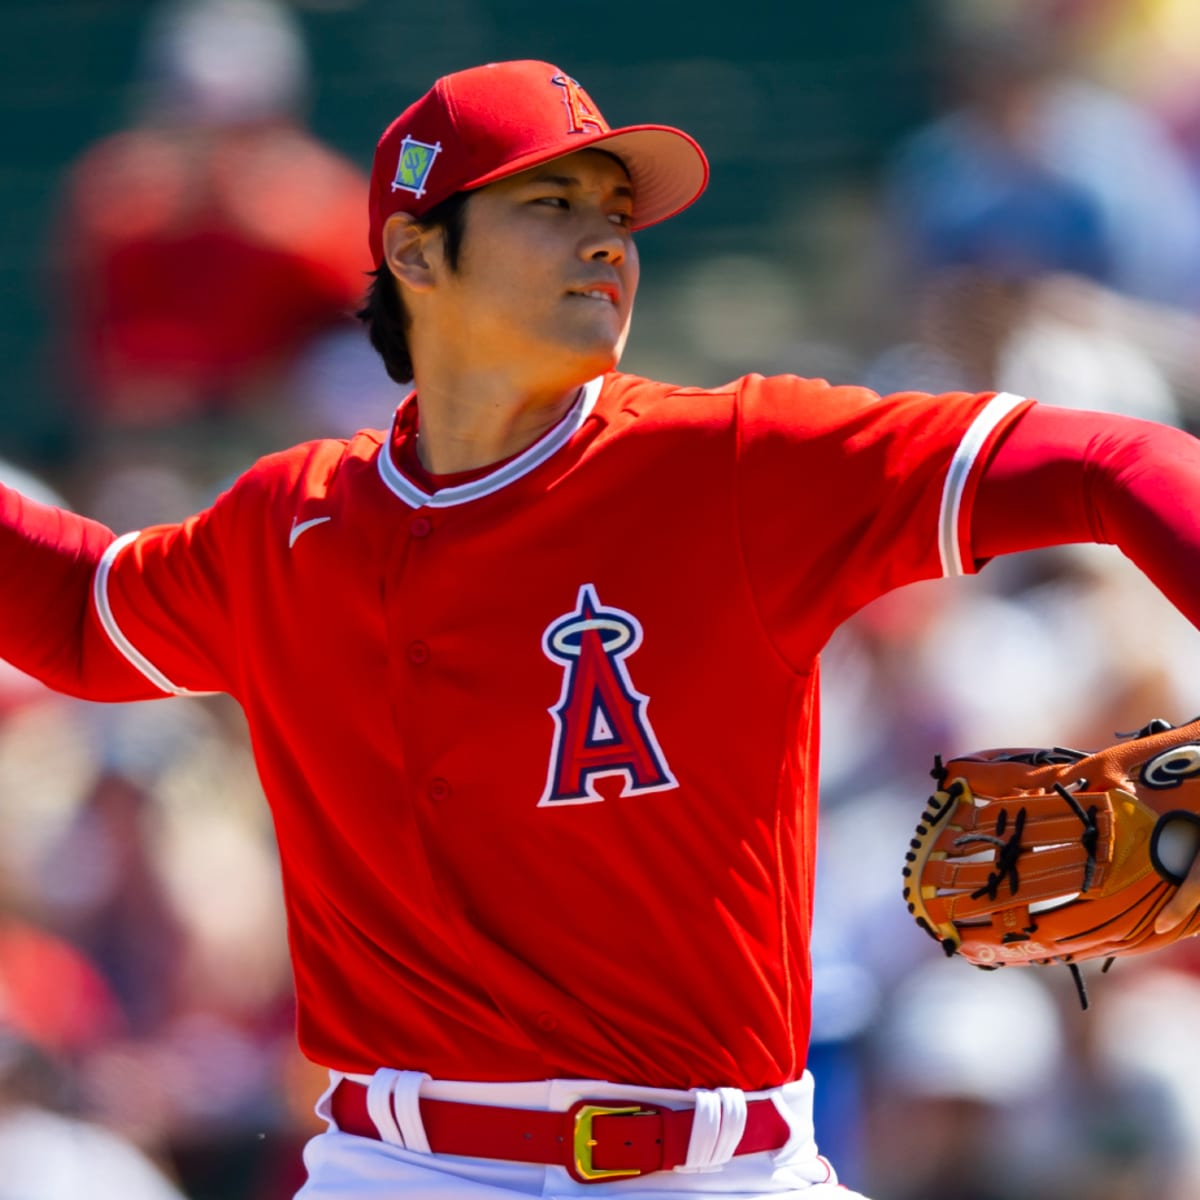 Baseball: Shohei Ohtani shines as New York fetes history, Judge matchup